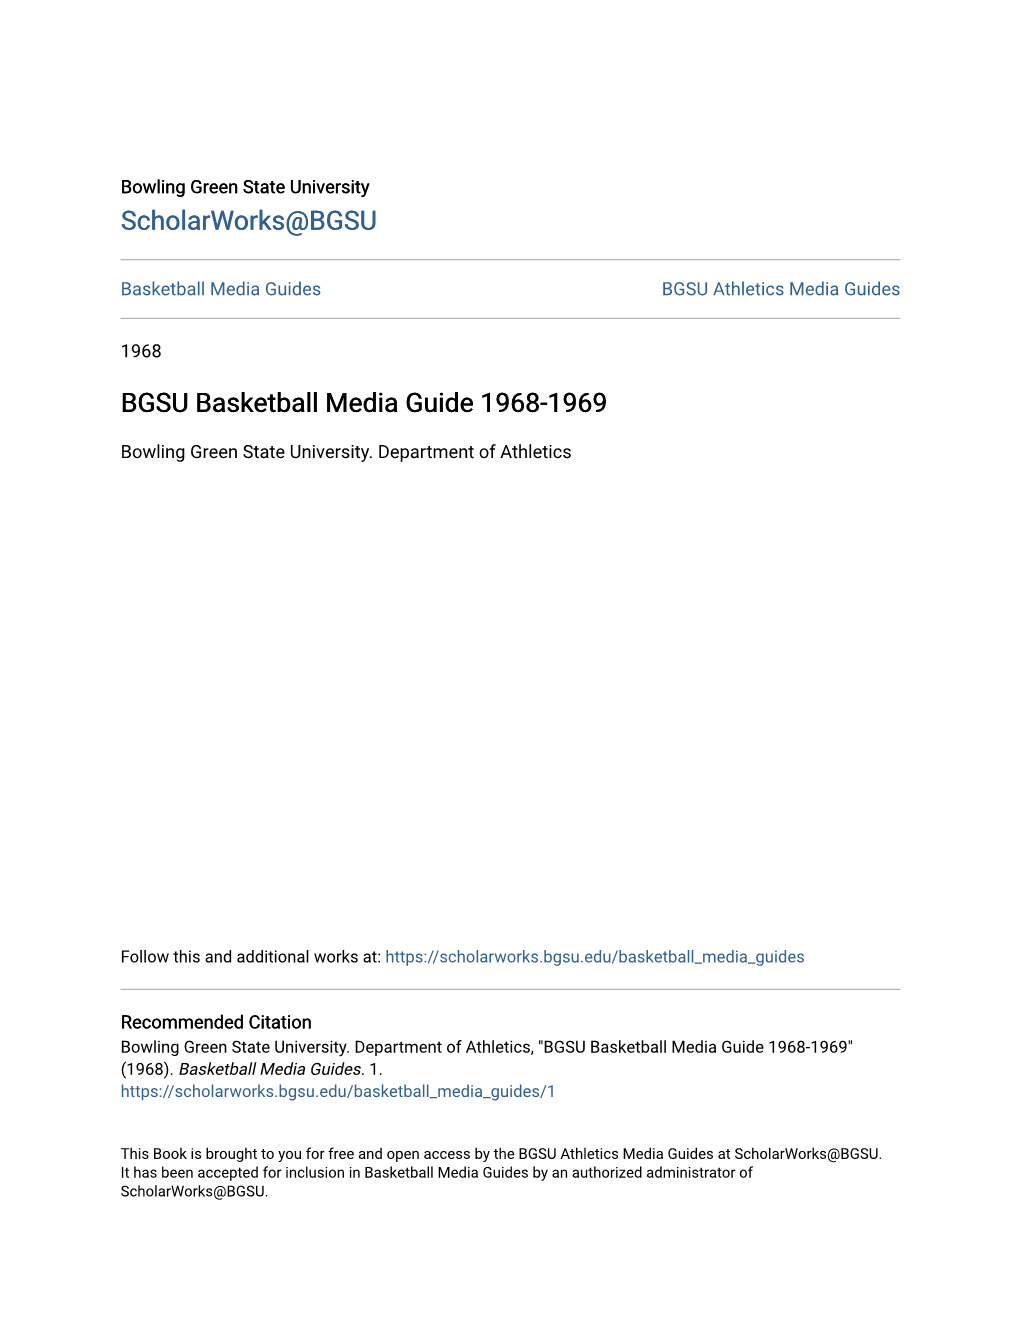 BGSU Basketball Media Guide 1968-1969